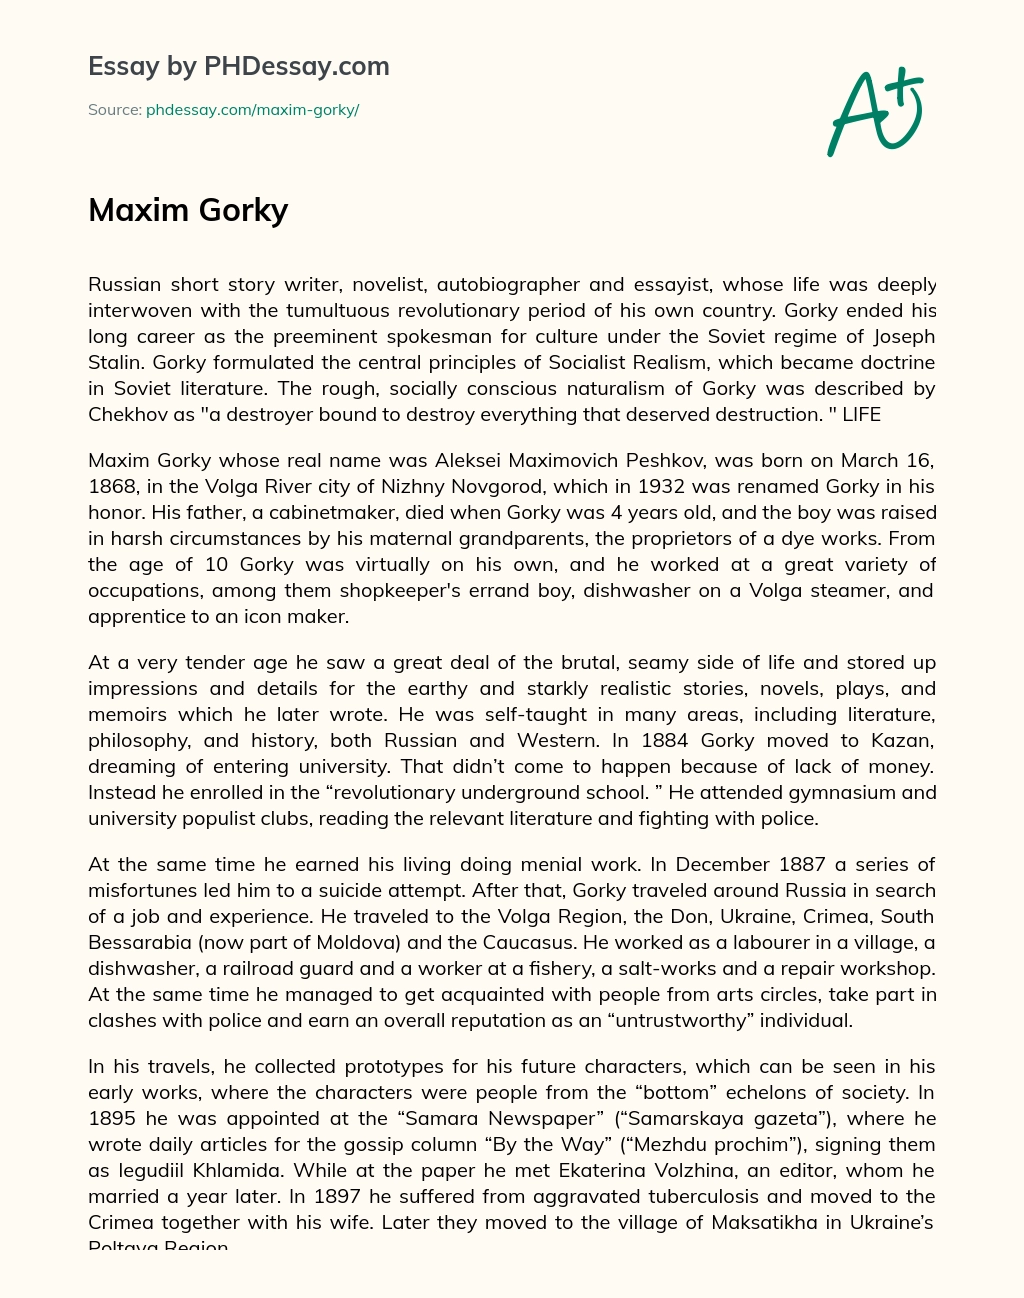 Maxim Gorky: Life and Legacy of a Revolutionary Writer essay